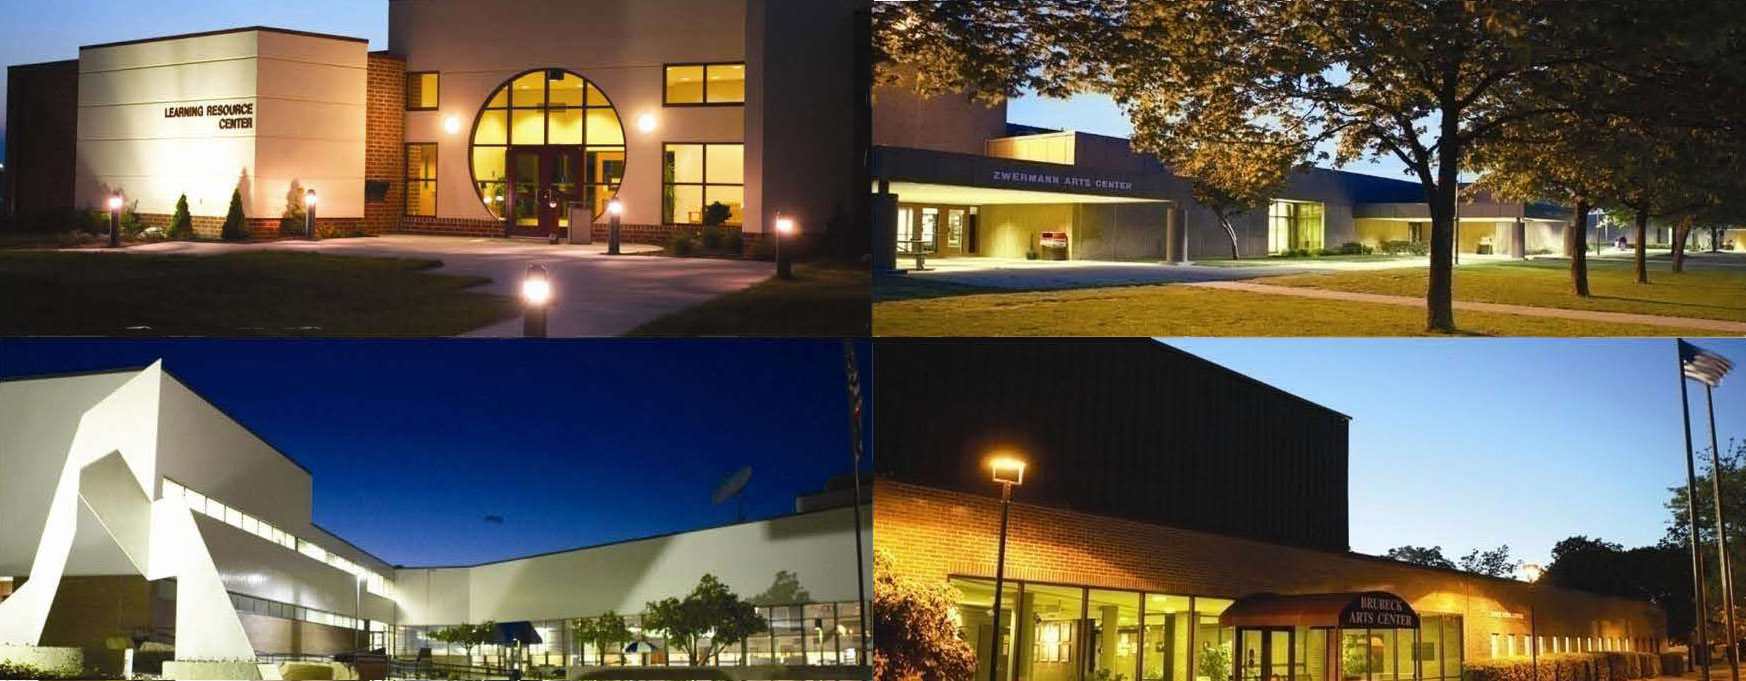 IECC College Campuses Photo Collage